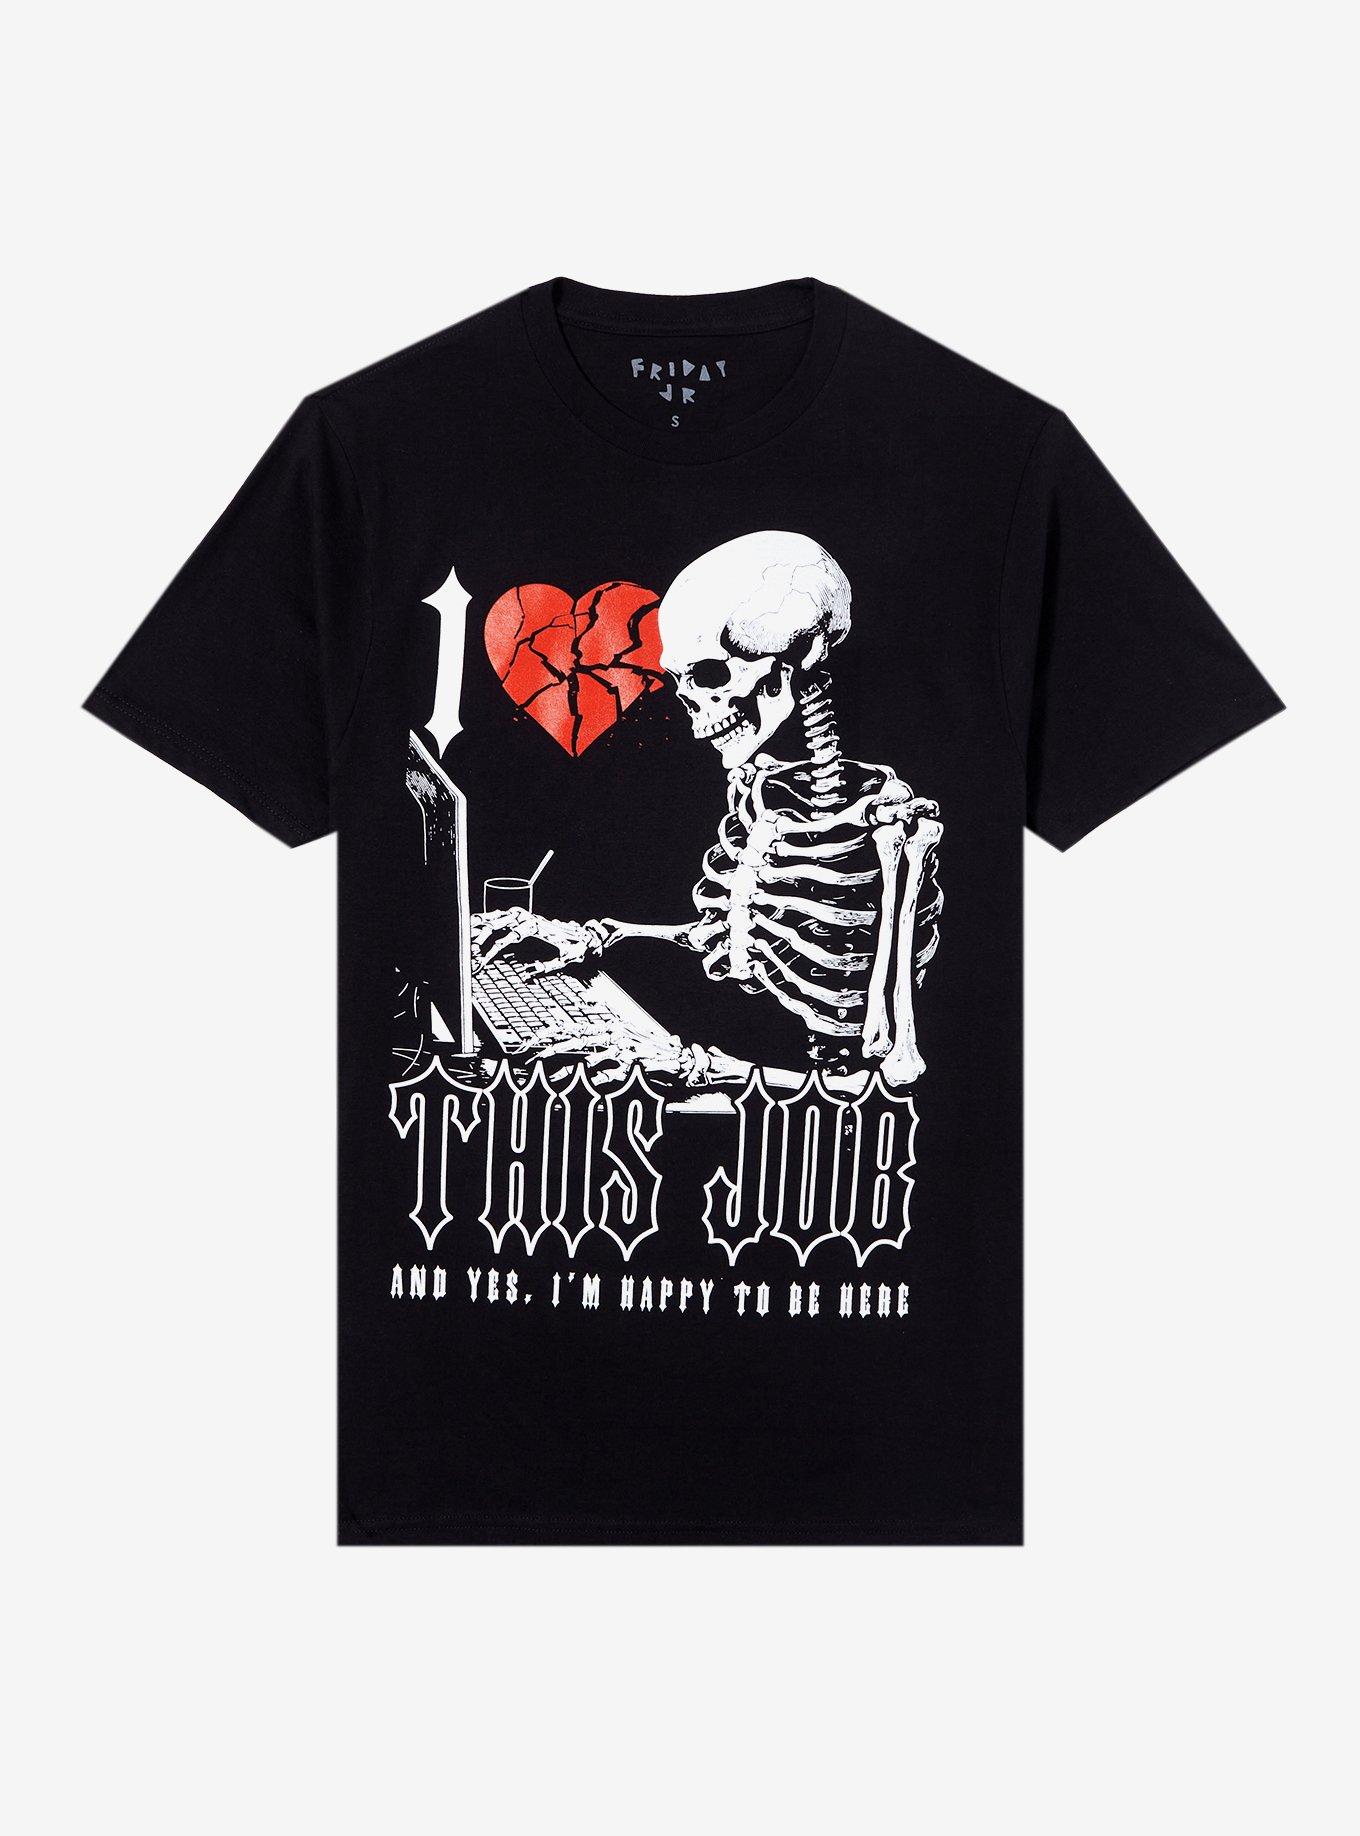 I Love This Job Skeleton T-Shirt By Friday Jr